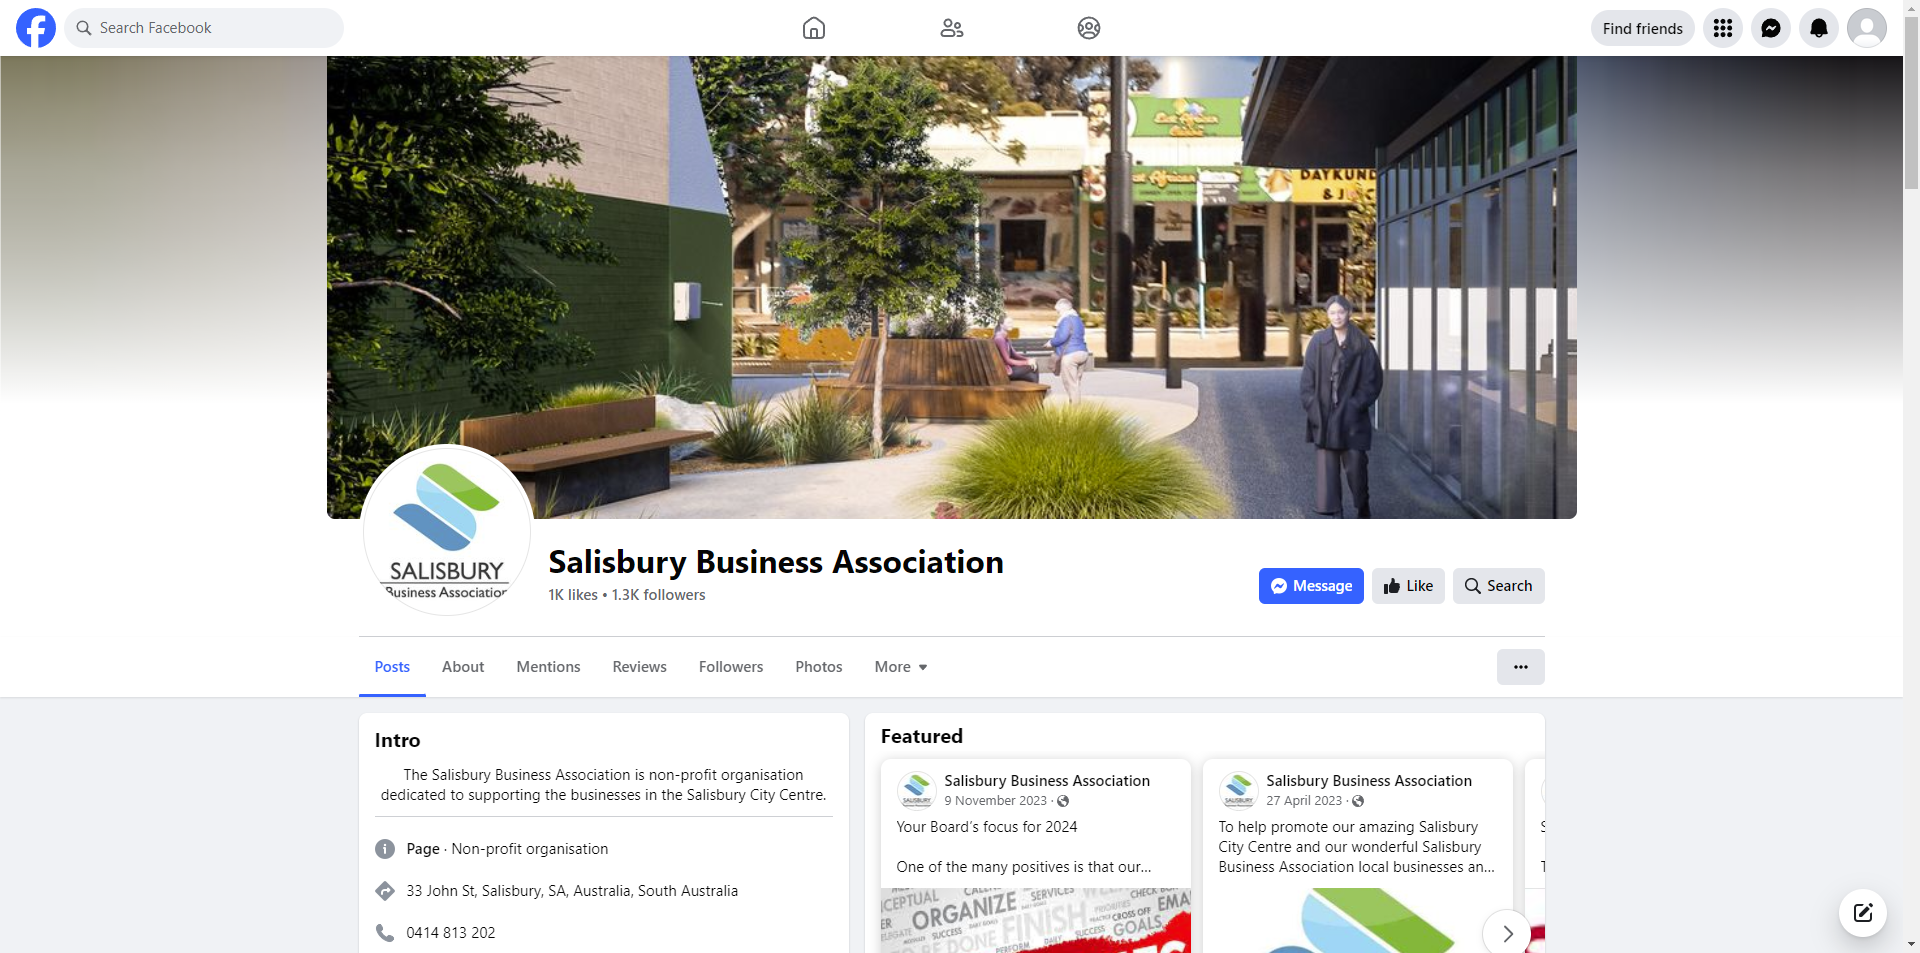 Salisbury Business Association | Adelaide SA